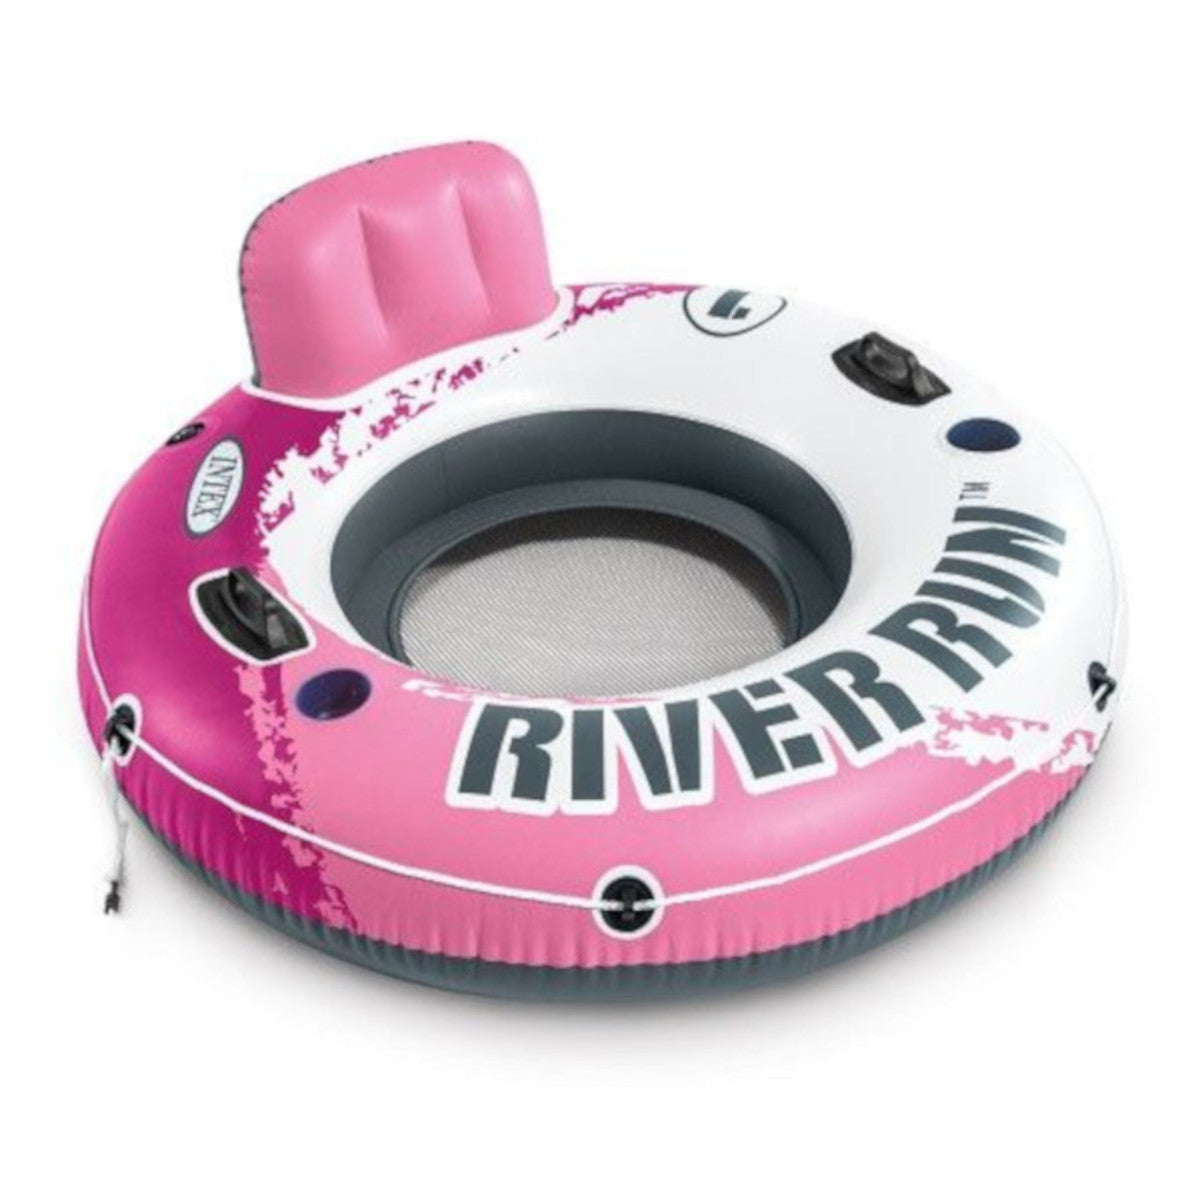 Schwimmring - Pink River Run 1 - Ø135 cm